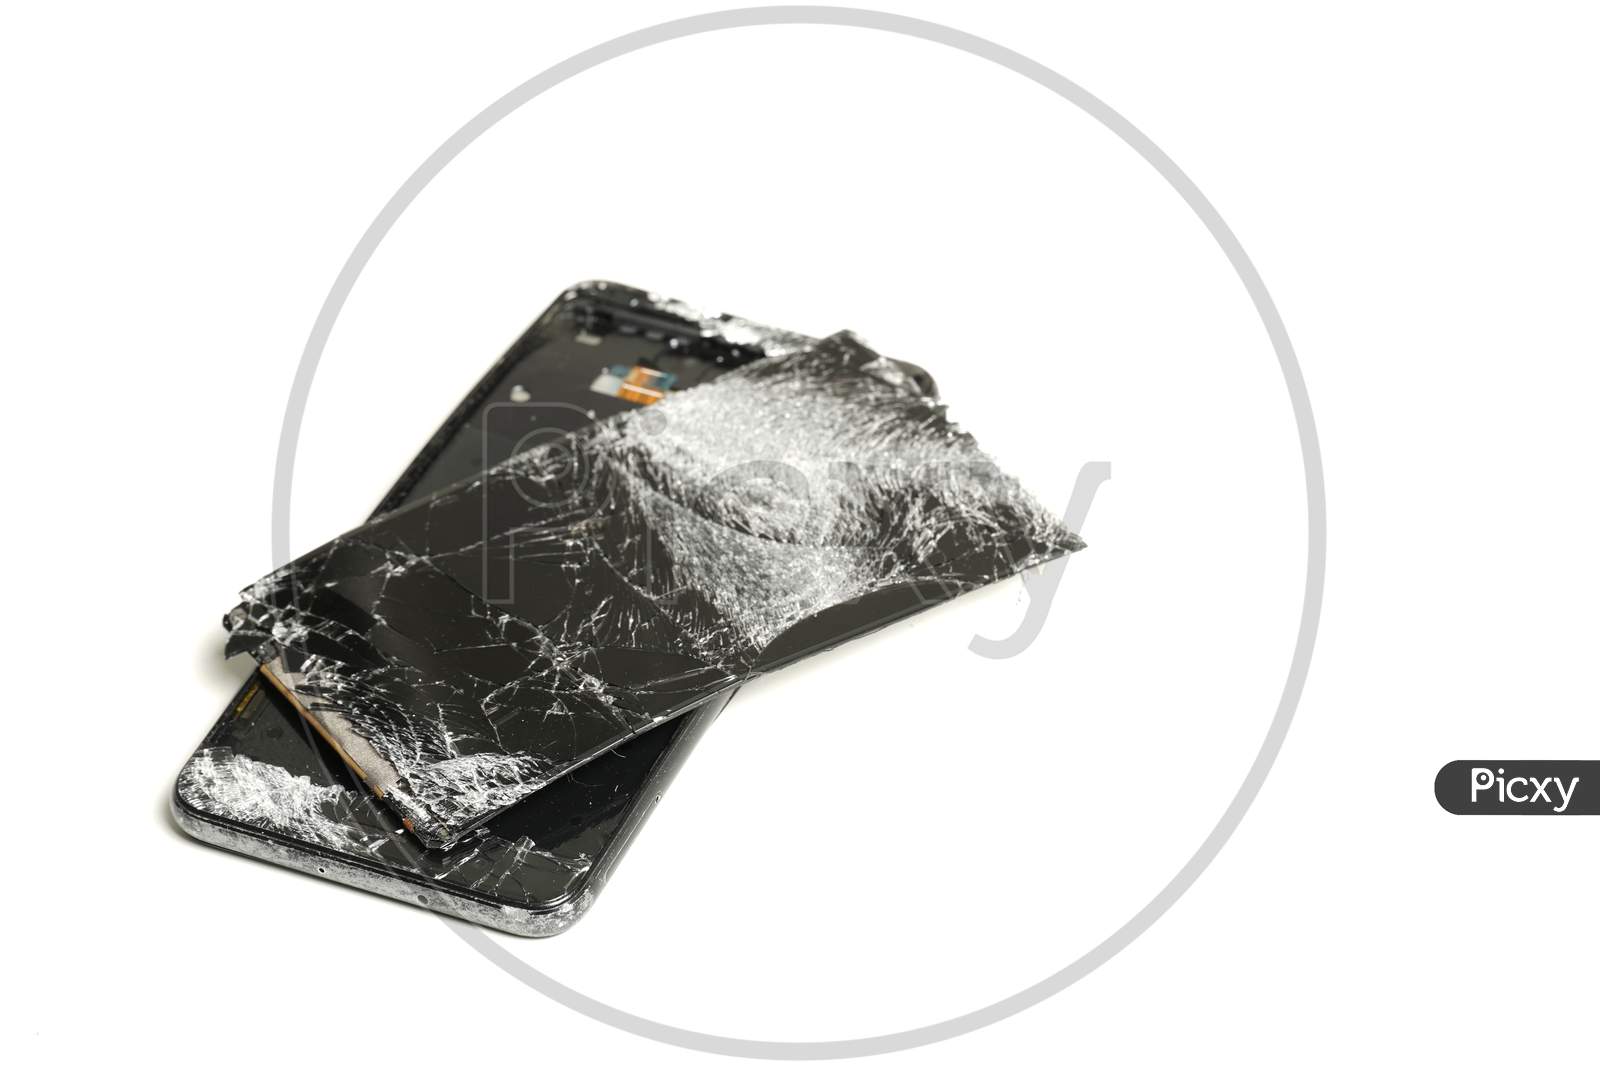 Broken Smartphone On A White Background